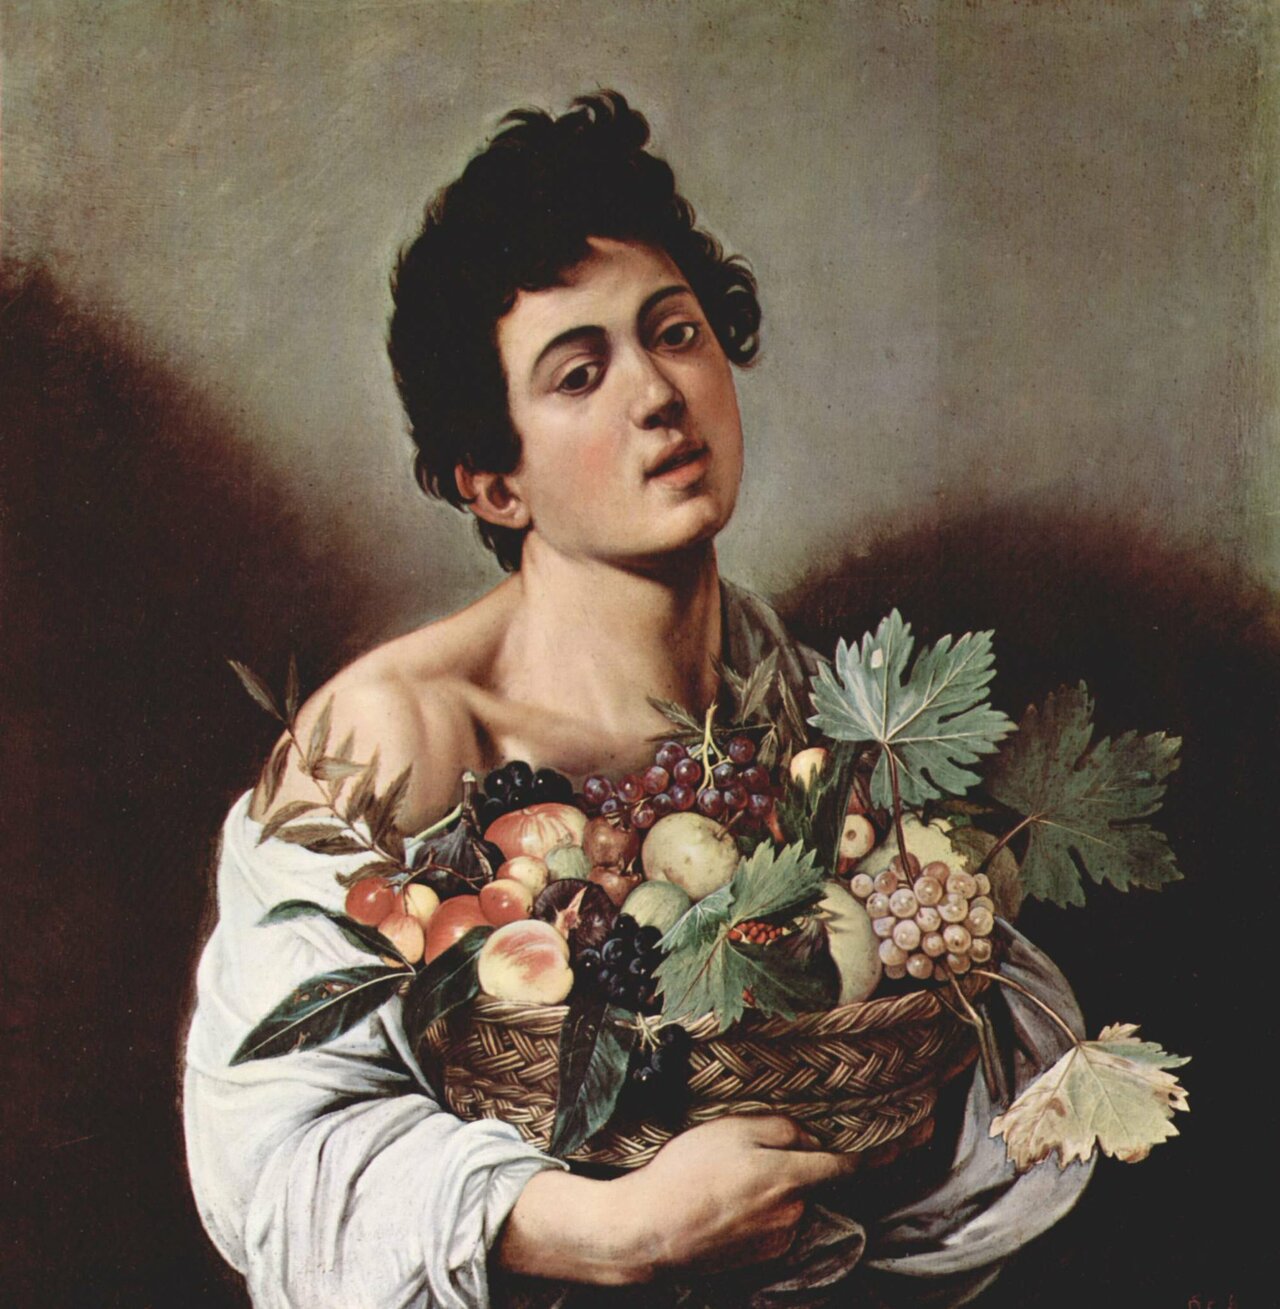 #Art .::. Carvaggio 1571 - 1610 »Boy with a Basket of Fruit« → @JetSetRebels @sunnyD_marie @peacestefan http://t.co/vF0ghWG6dn